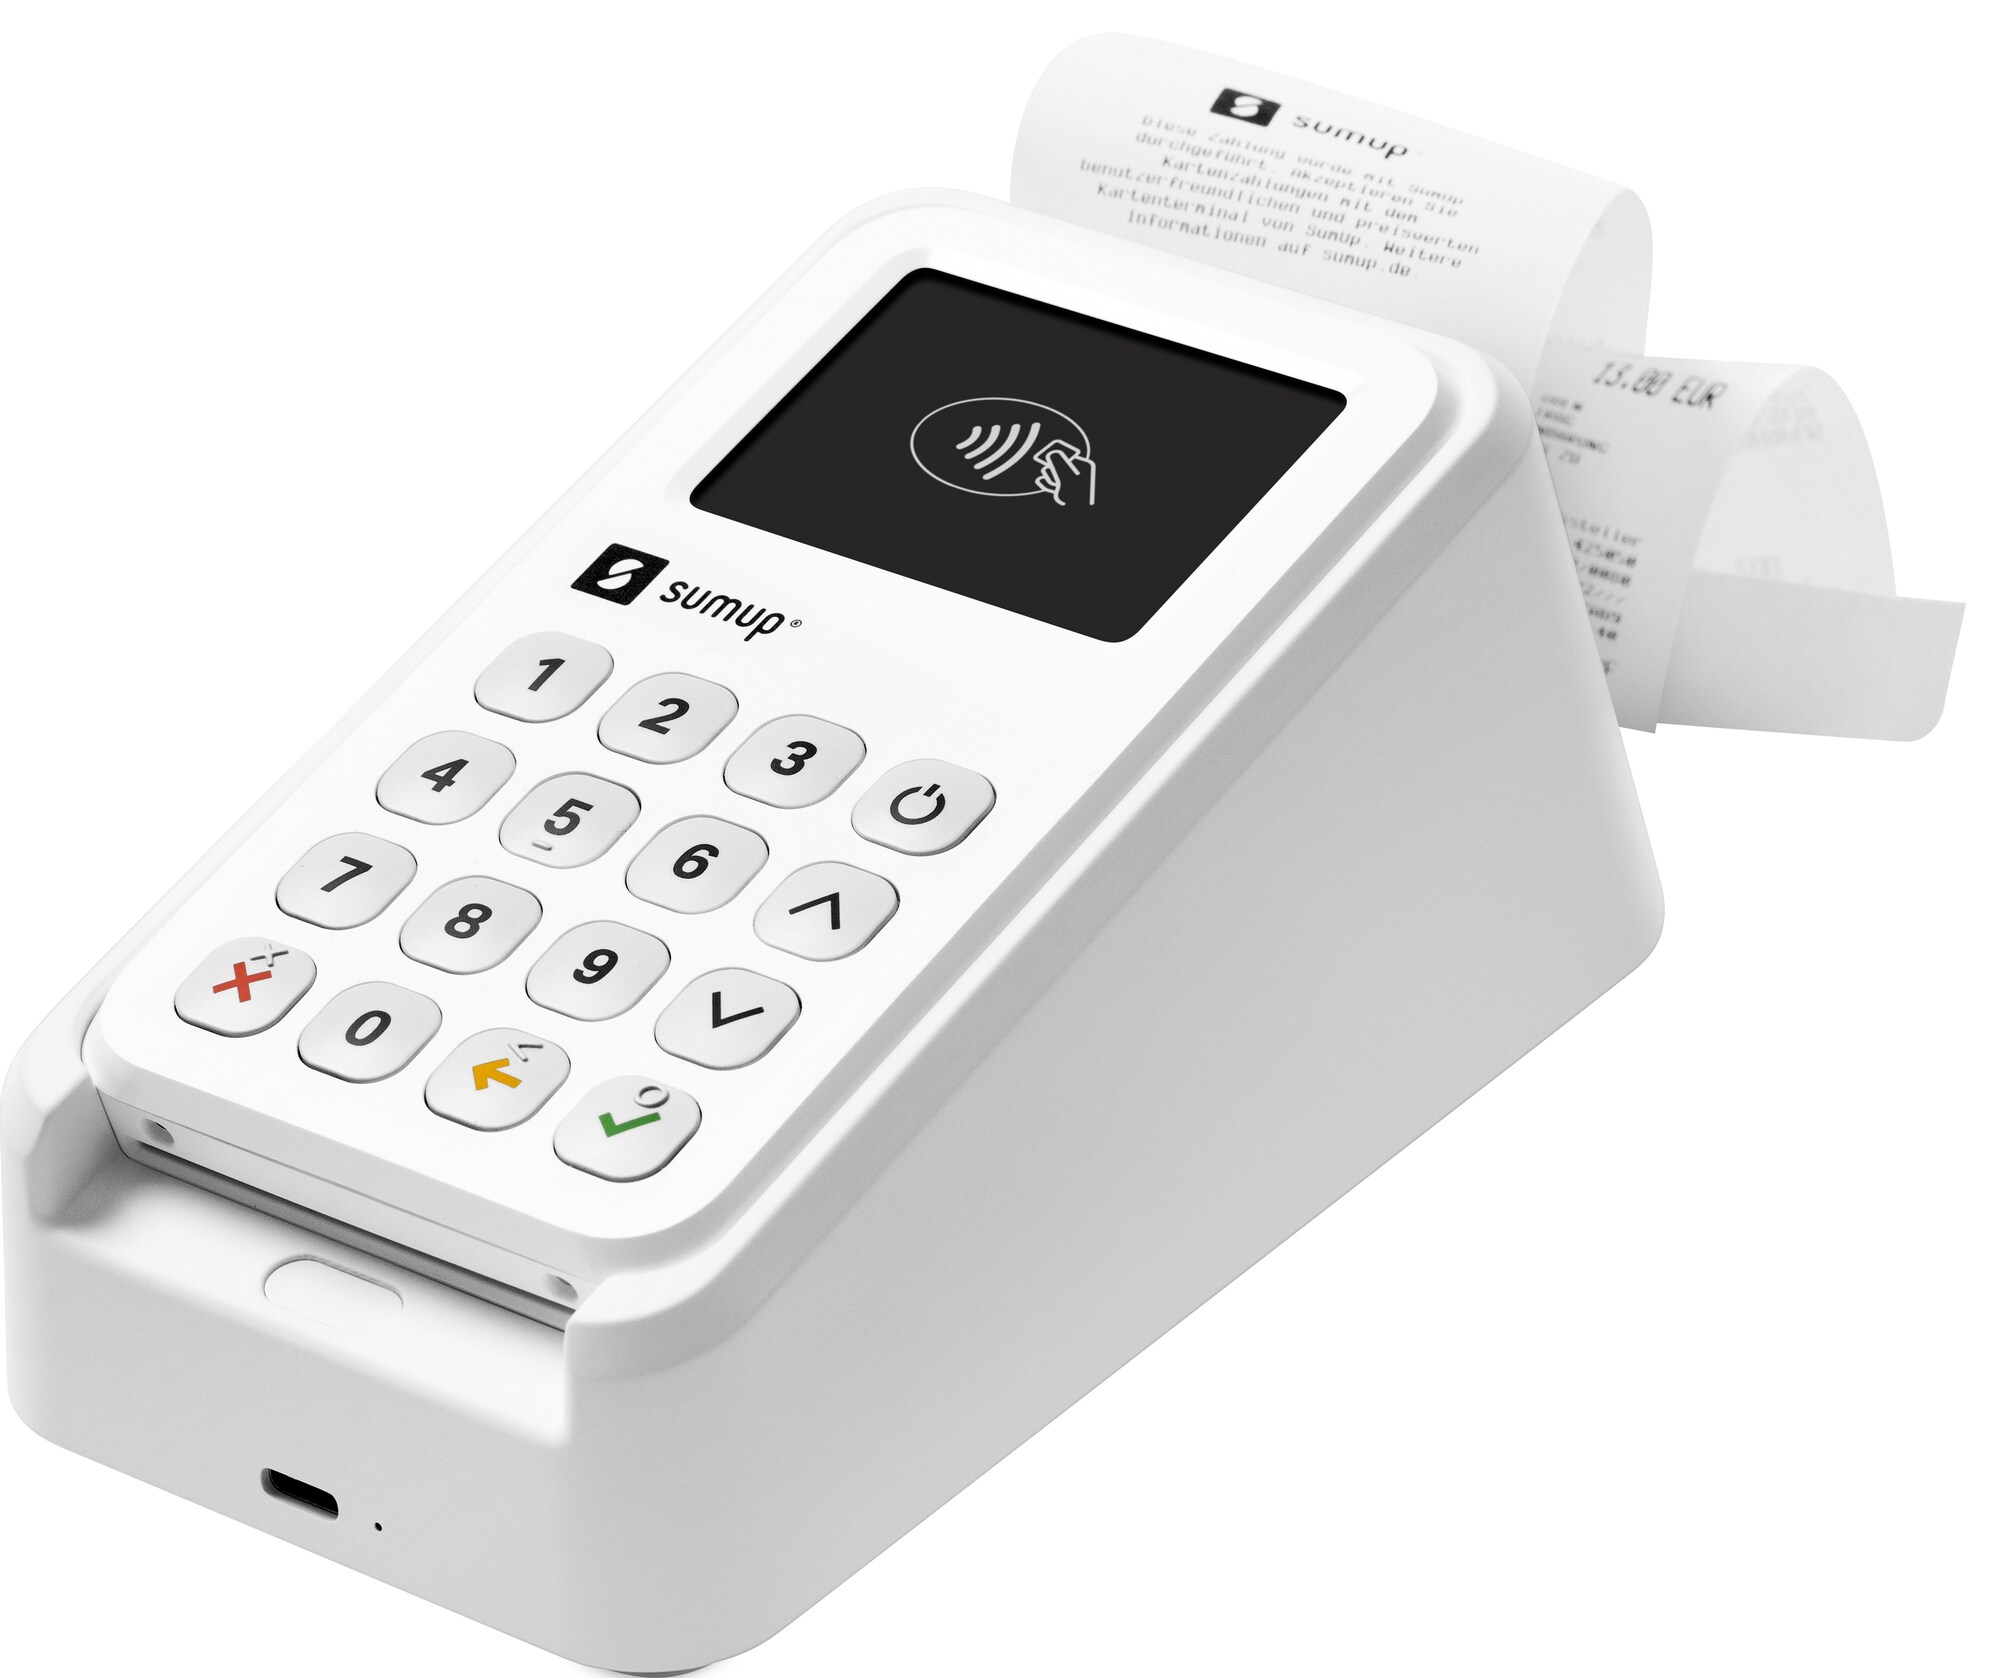 SumUp 3G trådløs betalingsterminal med kvitteringsprinter - Elkjøp